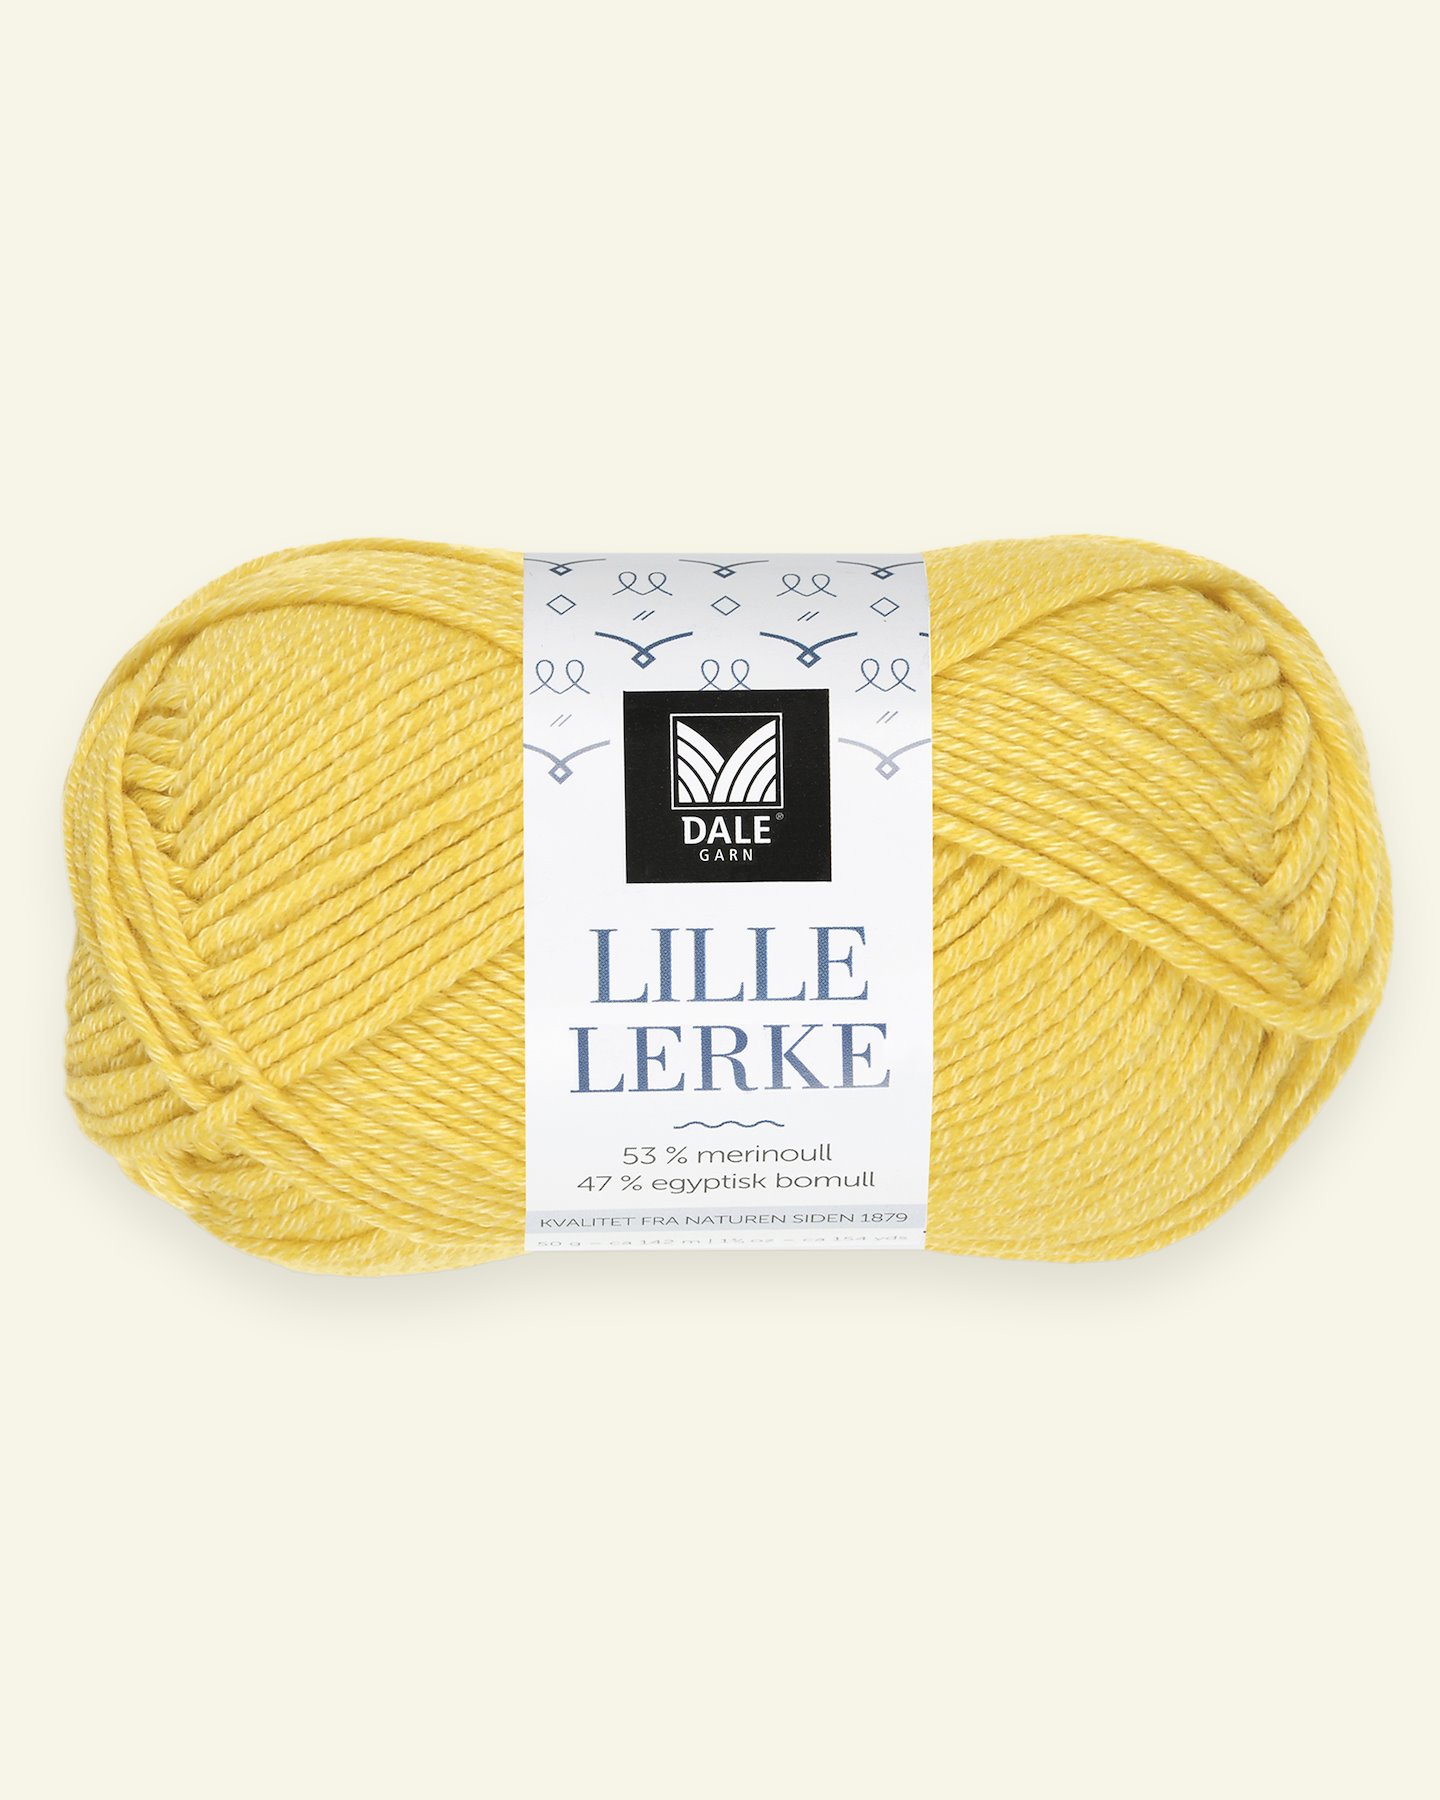 Dale Garn, merino/cotton yarn "Lille Lerke", yellow (8162) 90000429_pack